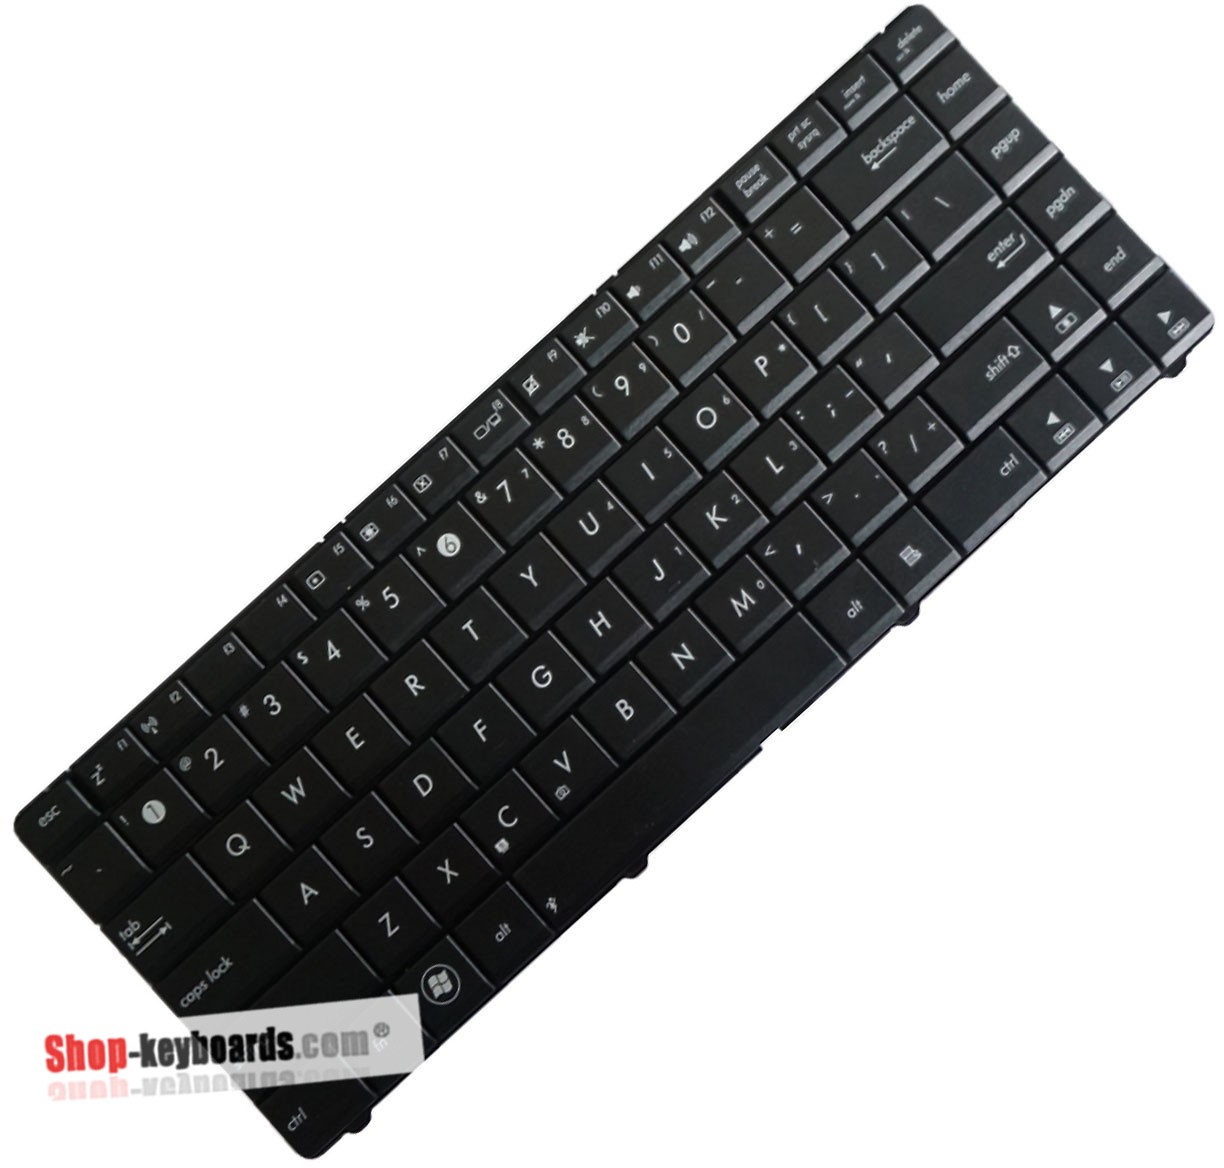 Asus X43U Keyboard replacement